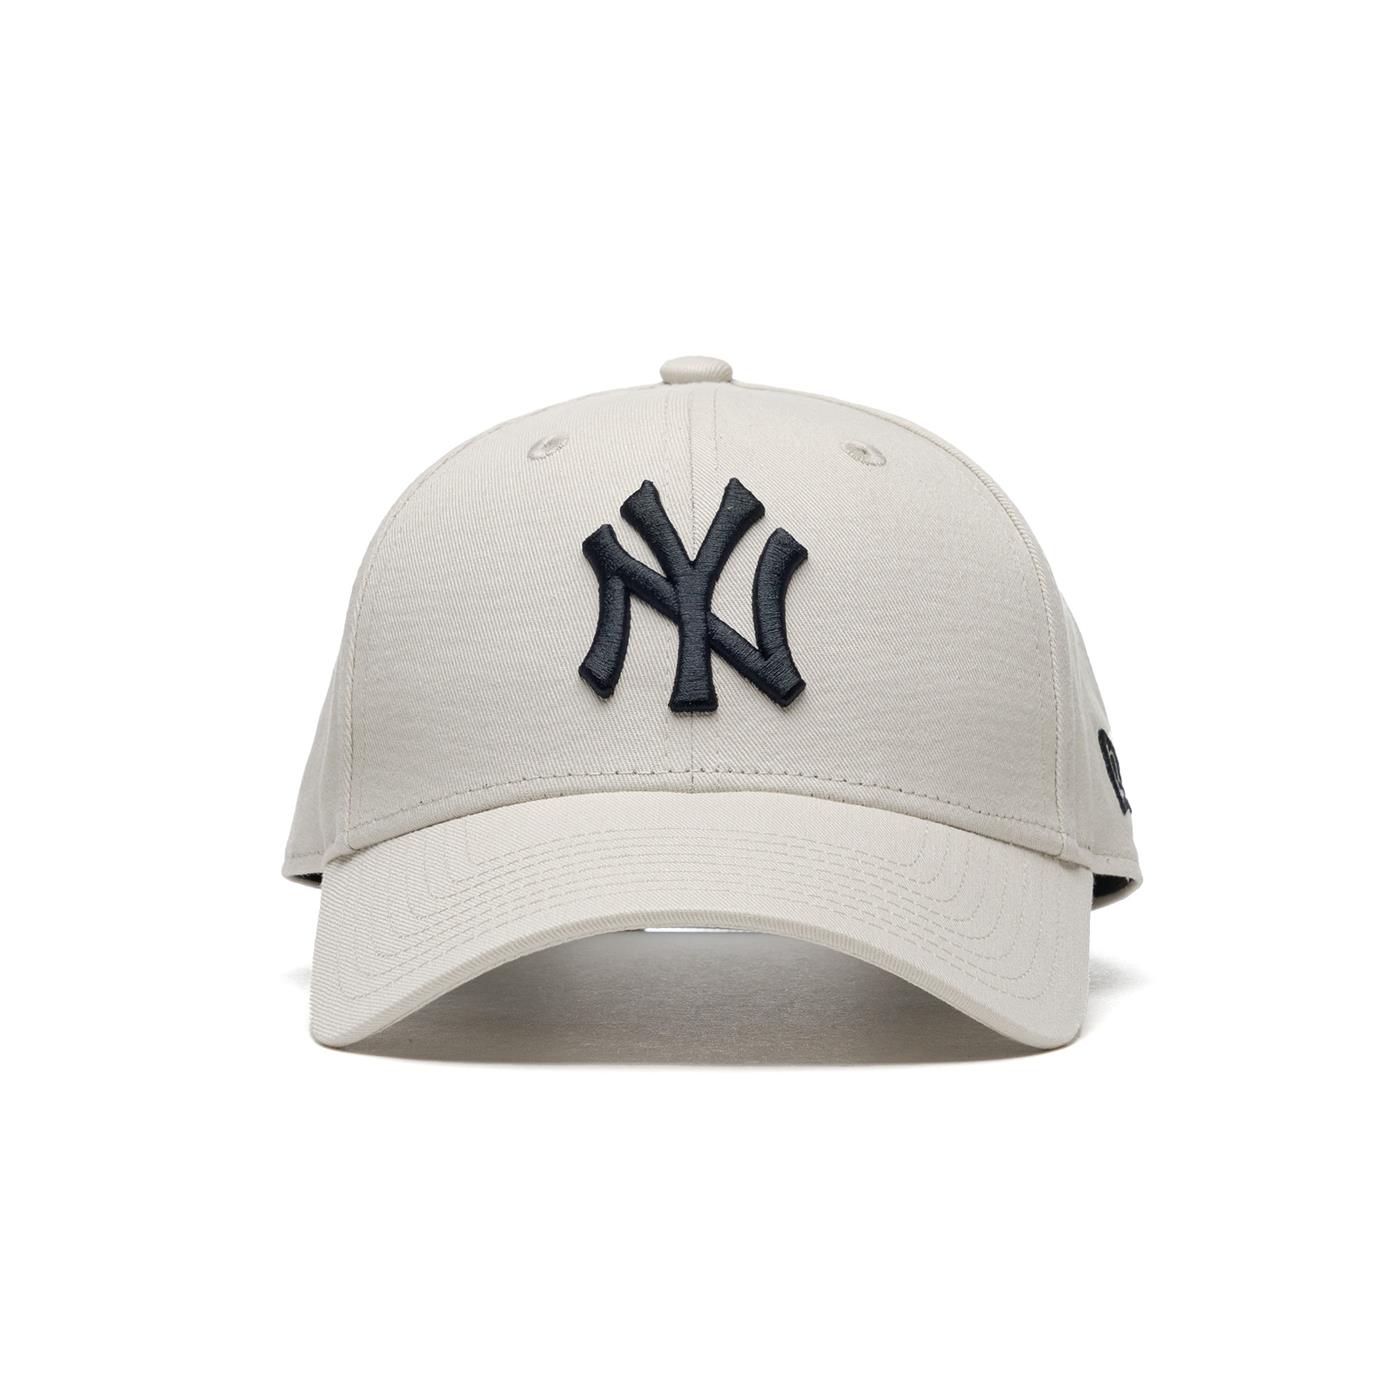 New era MLB League Essential 940 New York Yankees Cap Black